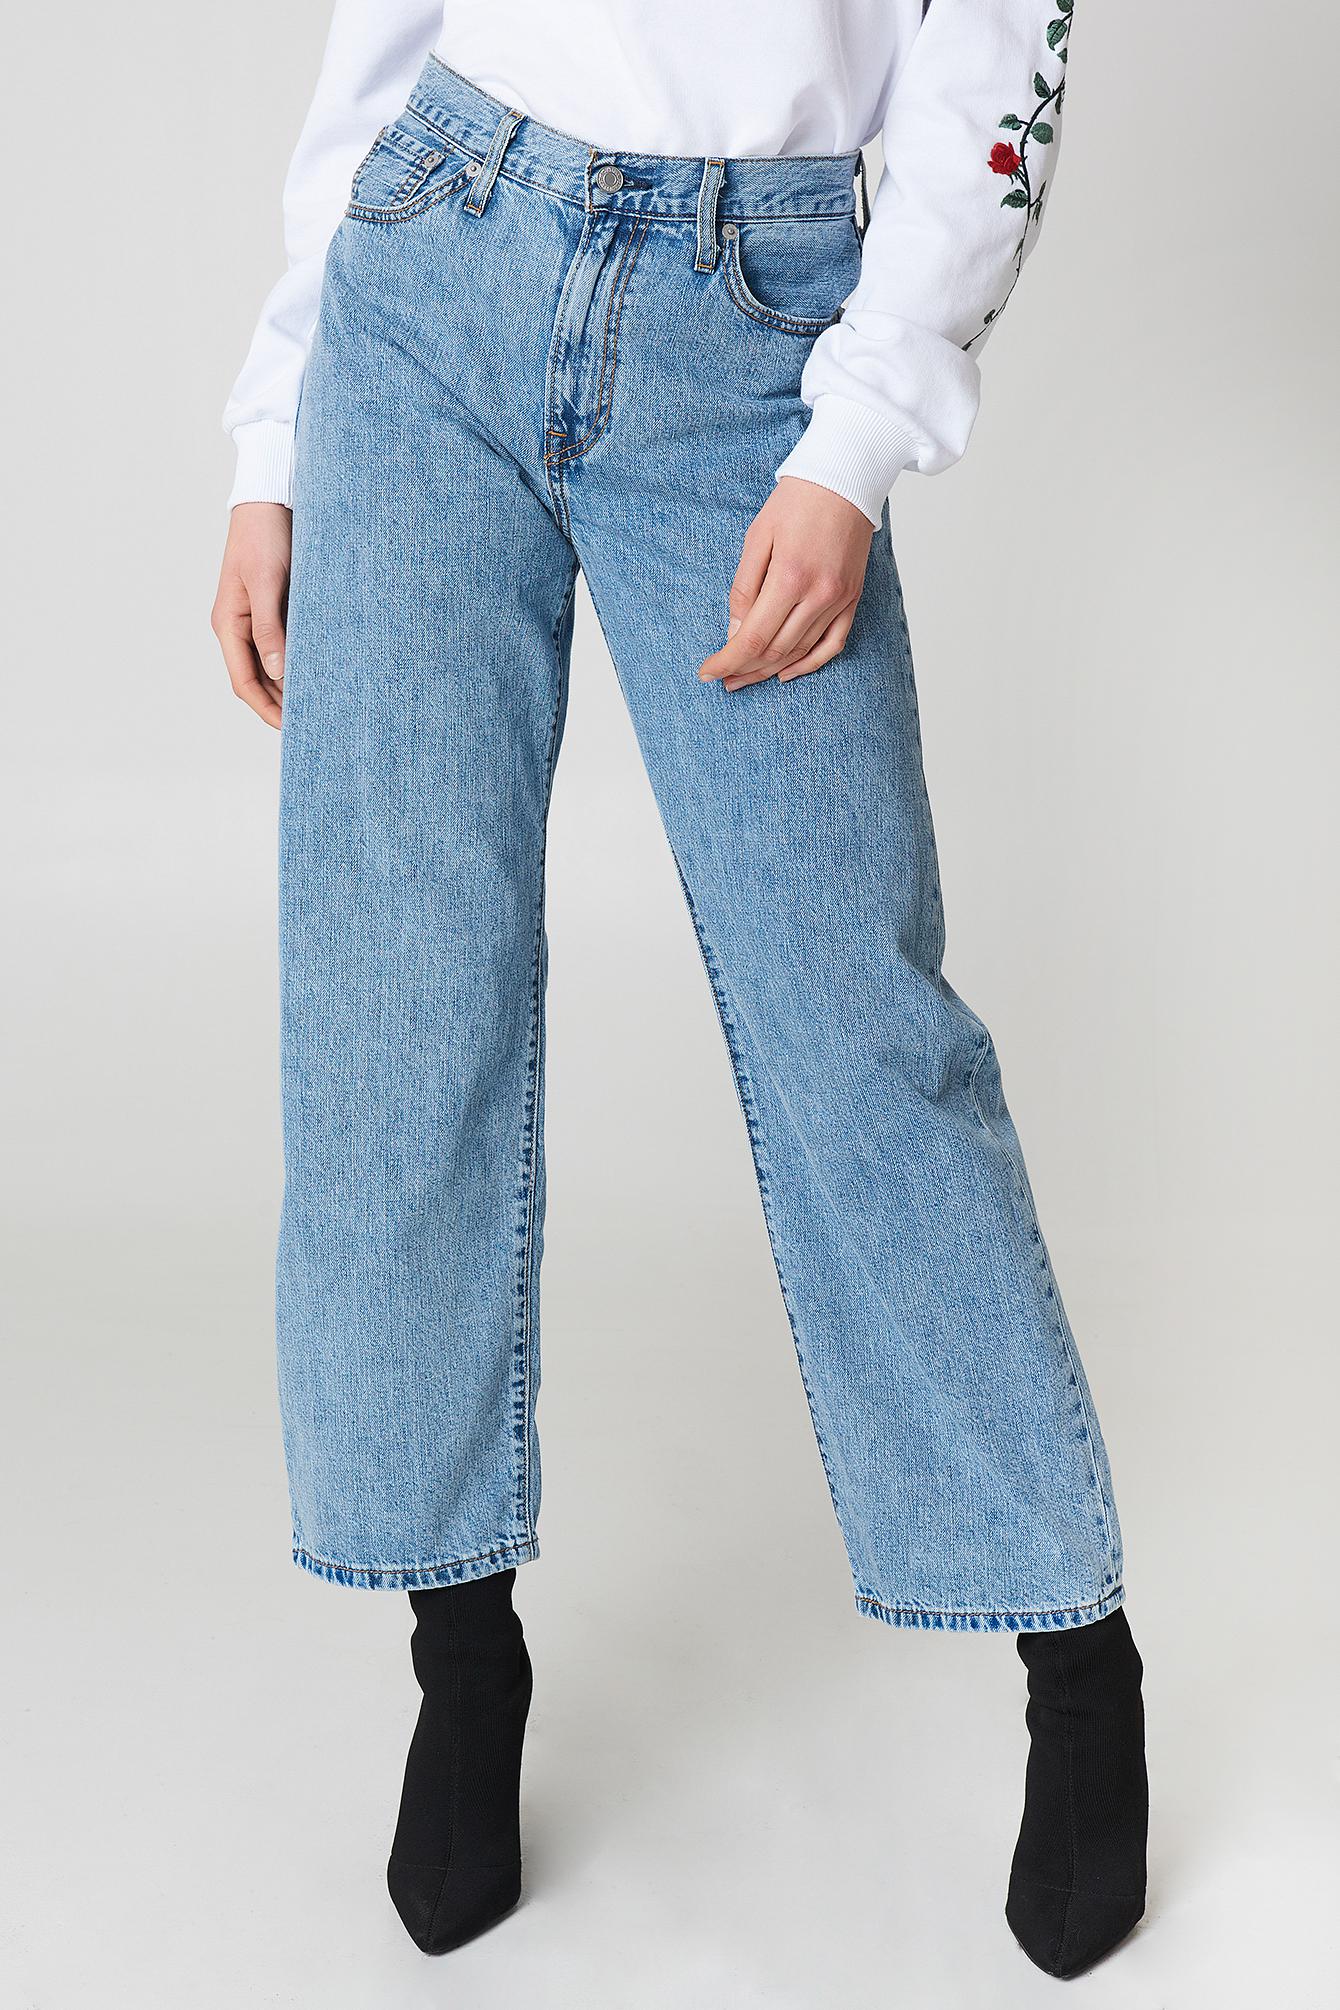 levi's big baggy jeans womens